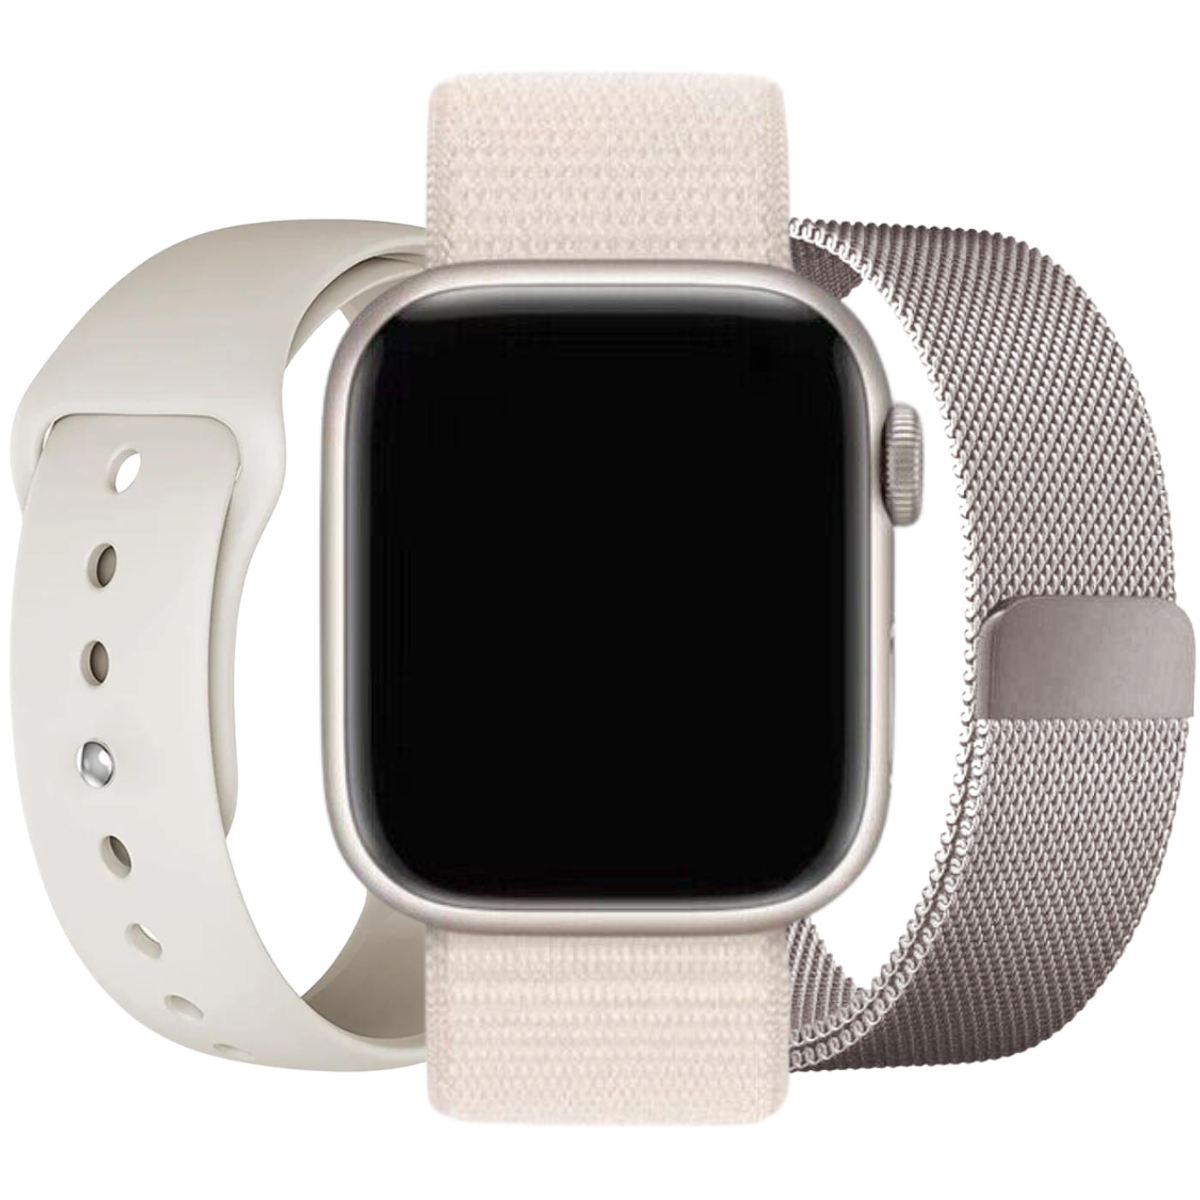 Starlight Apple Watch bundle deal - 3x